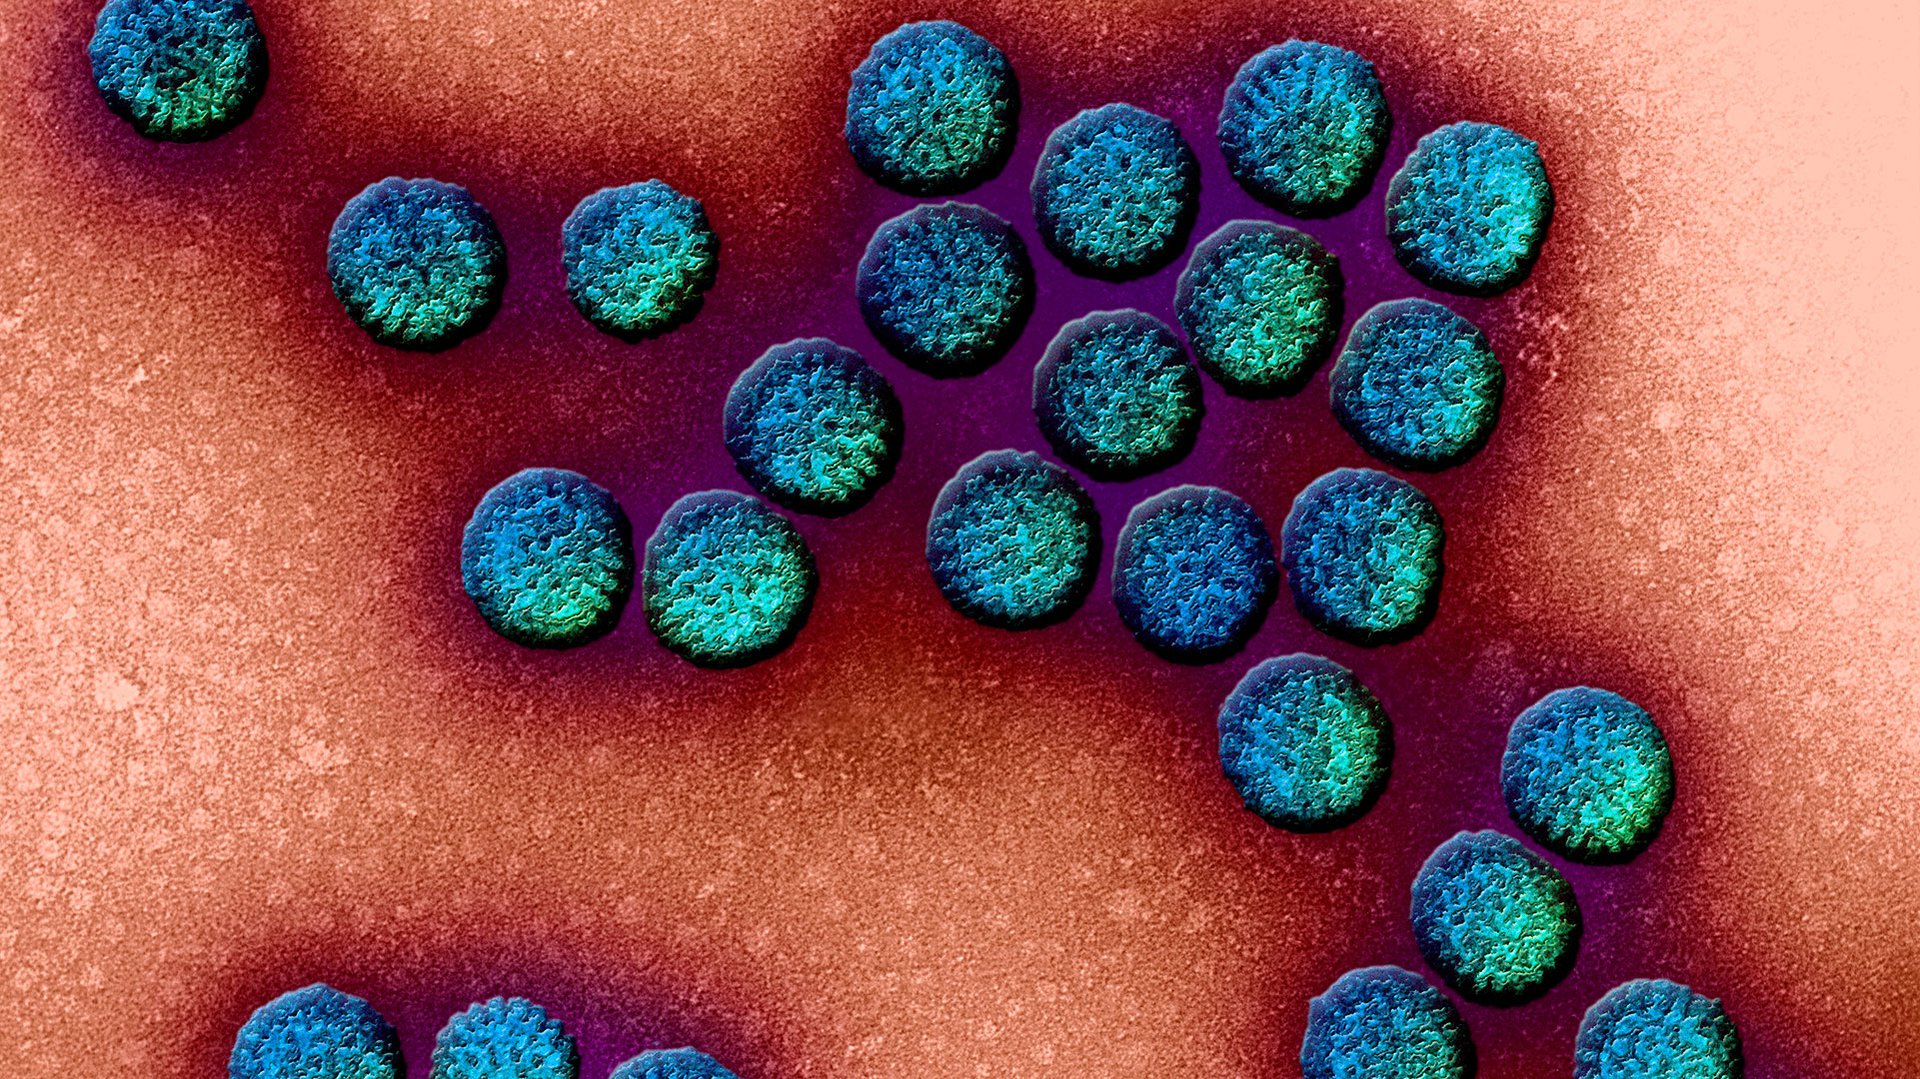 collegereeks microbiome rotavirus anp 1920x1080.jpg 1920x0 q85 subsampling 2